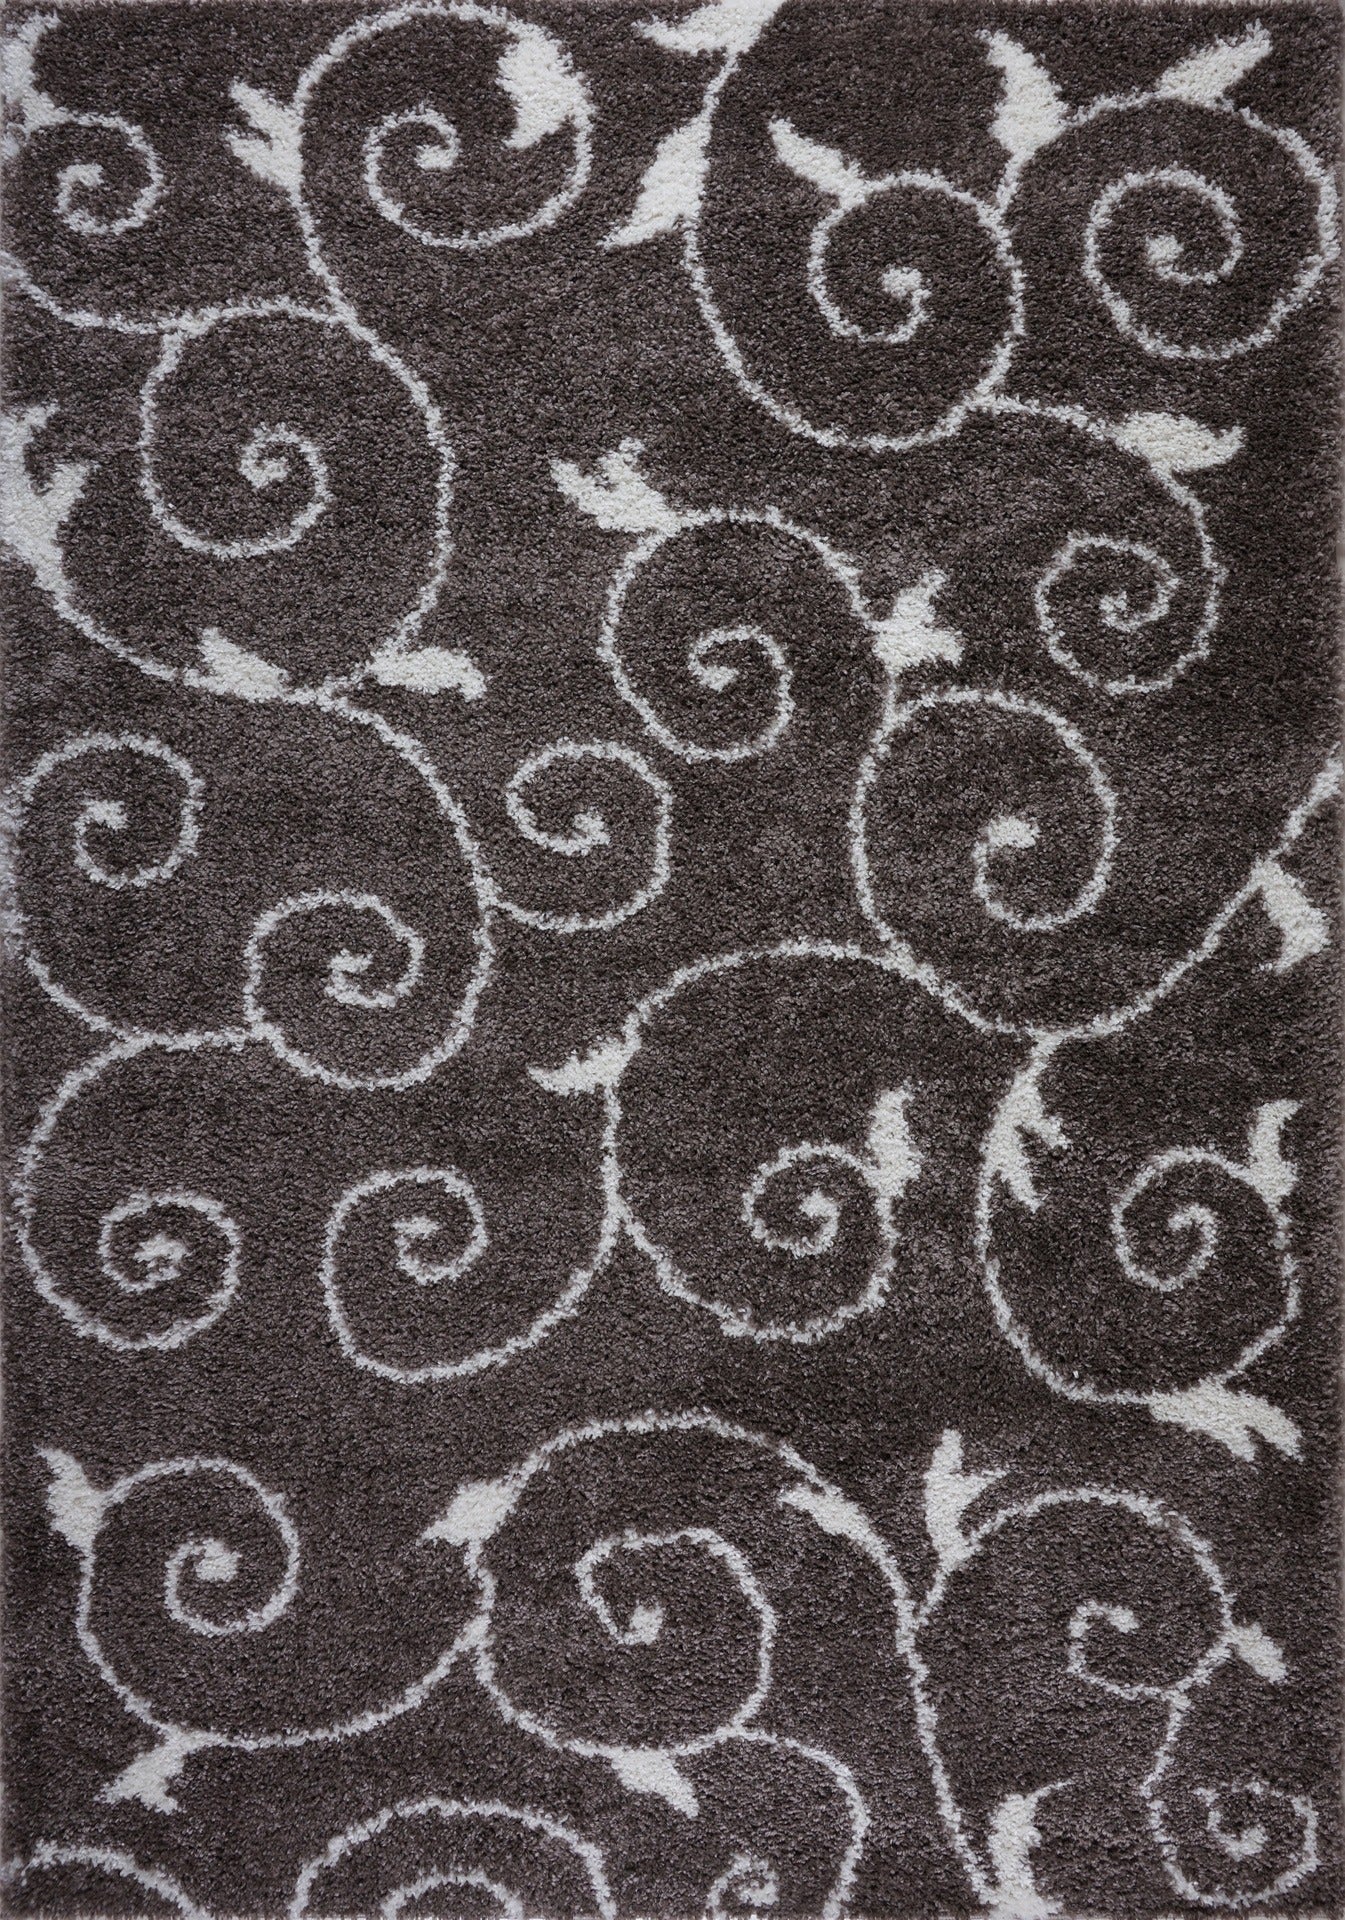 ladole rugs shaggy rabat abstract pattern sustainable spirals style indoor small mat doormat rug in mink white 110 x 211 57cm x 90cm 2x3 Doormat, Entrance, Balcony, Bathroom, Washroom